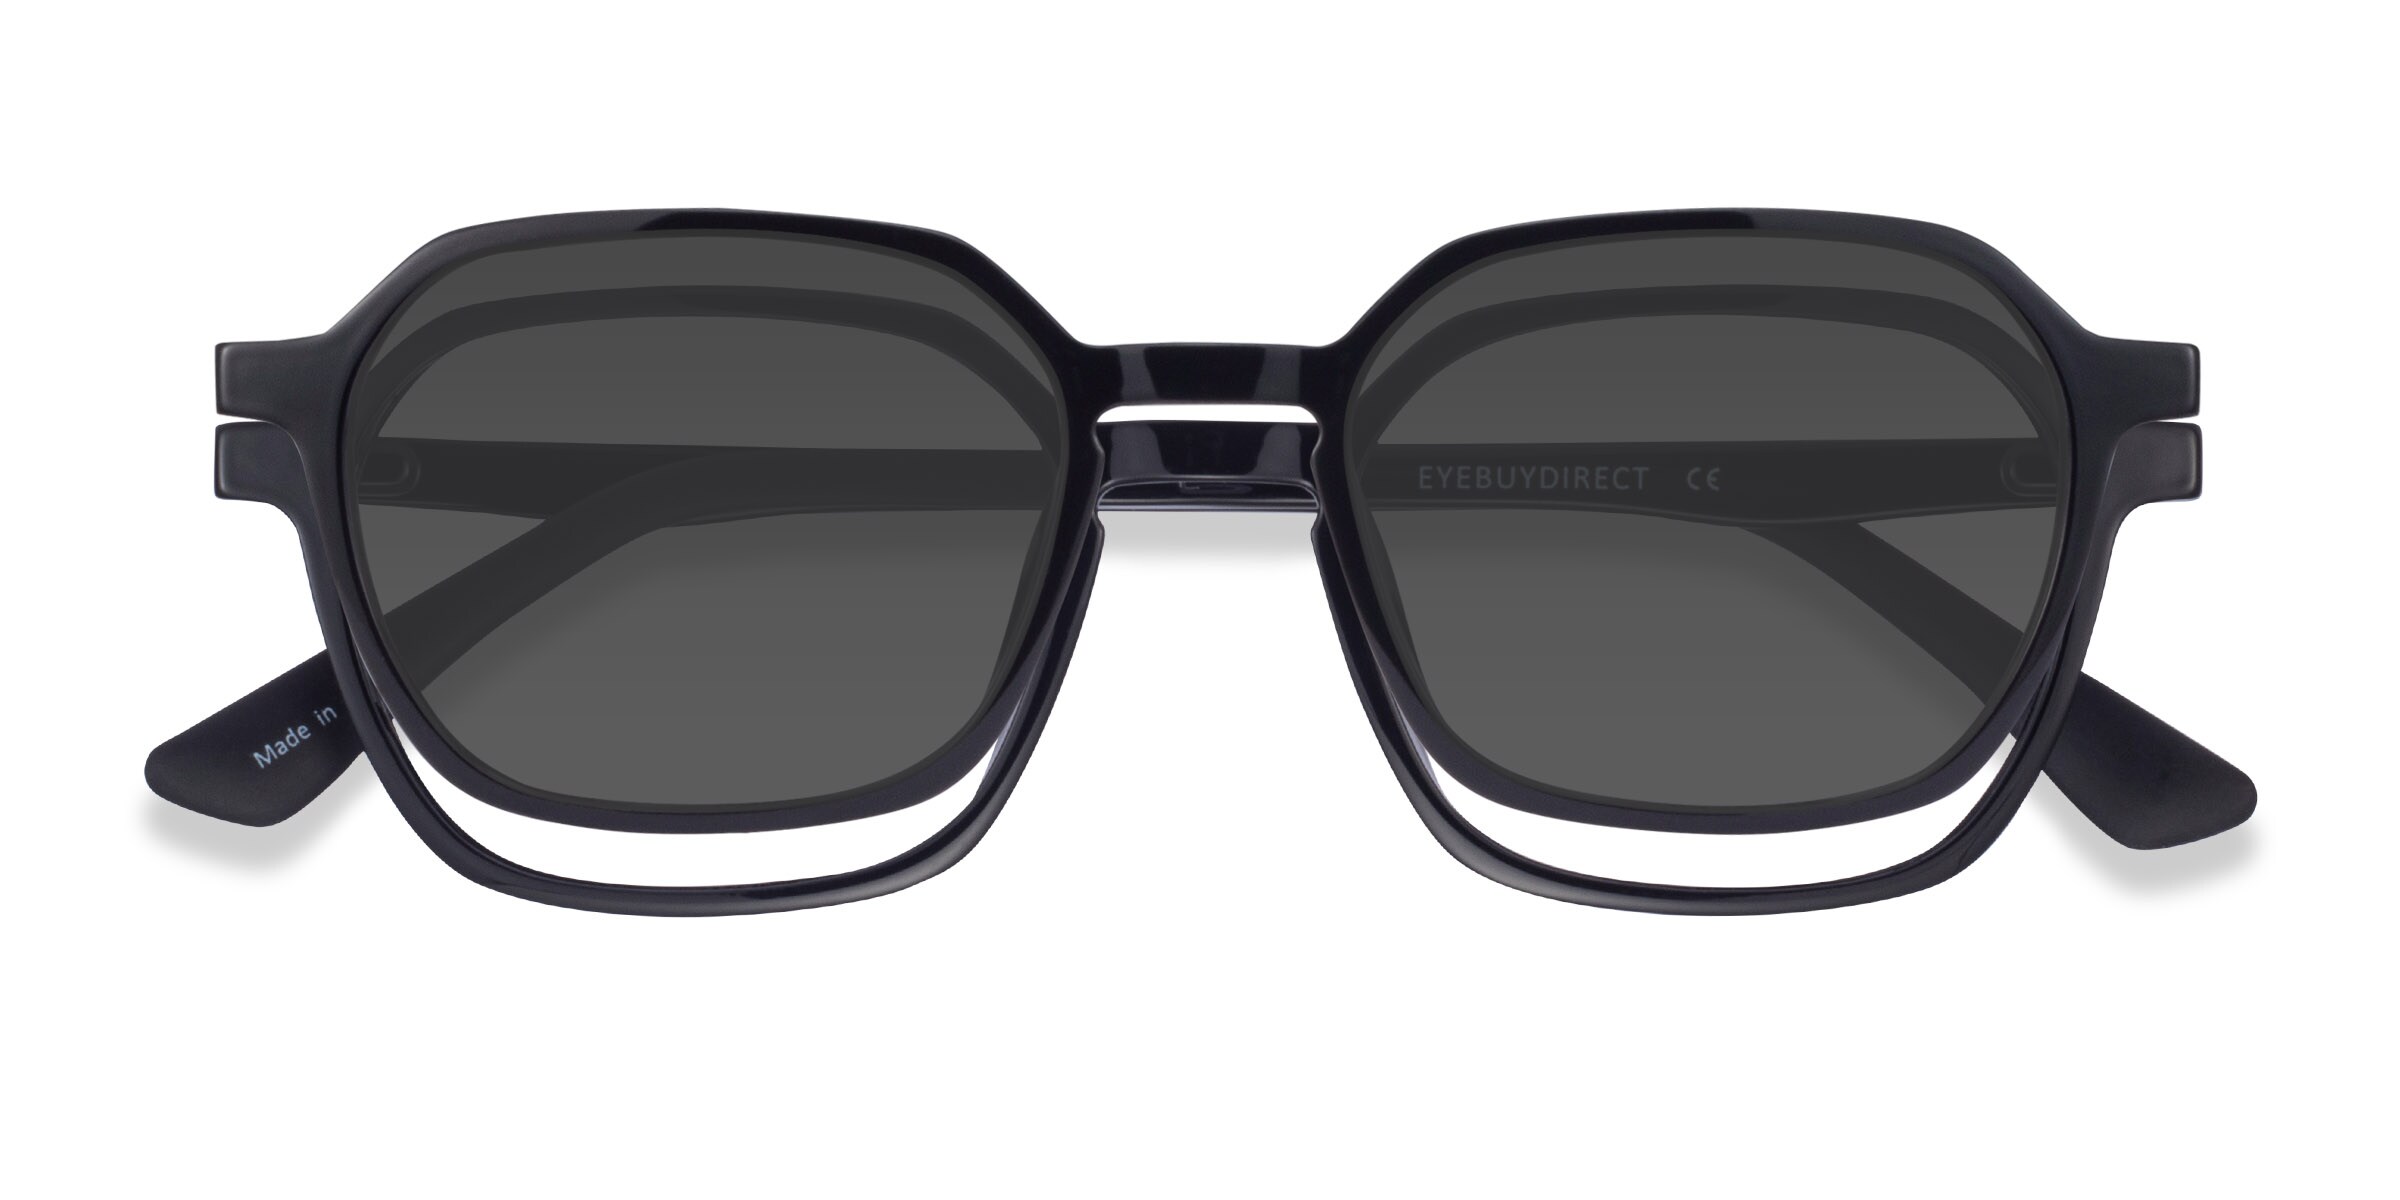 Pops Magnetic Glasses Home Try-On Kit | Try Glasses Before You Buy